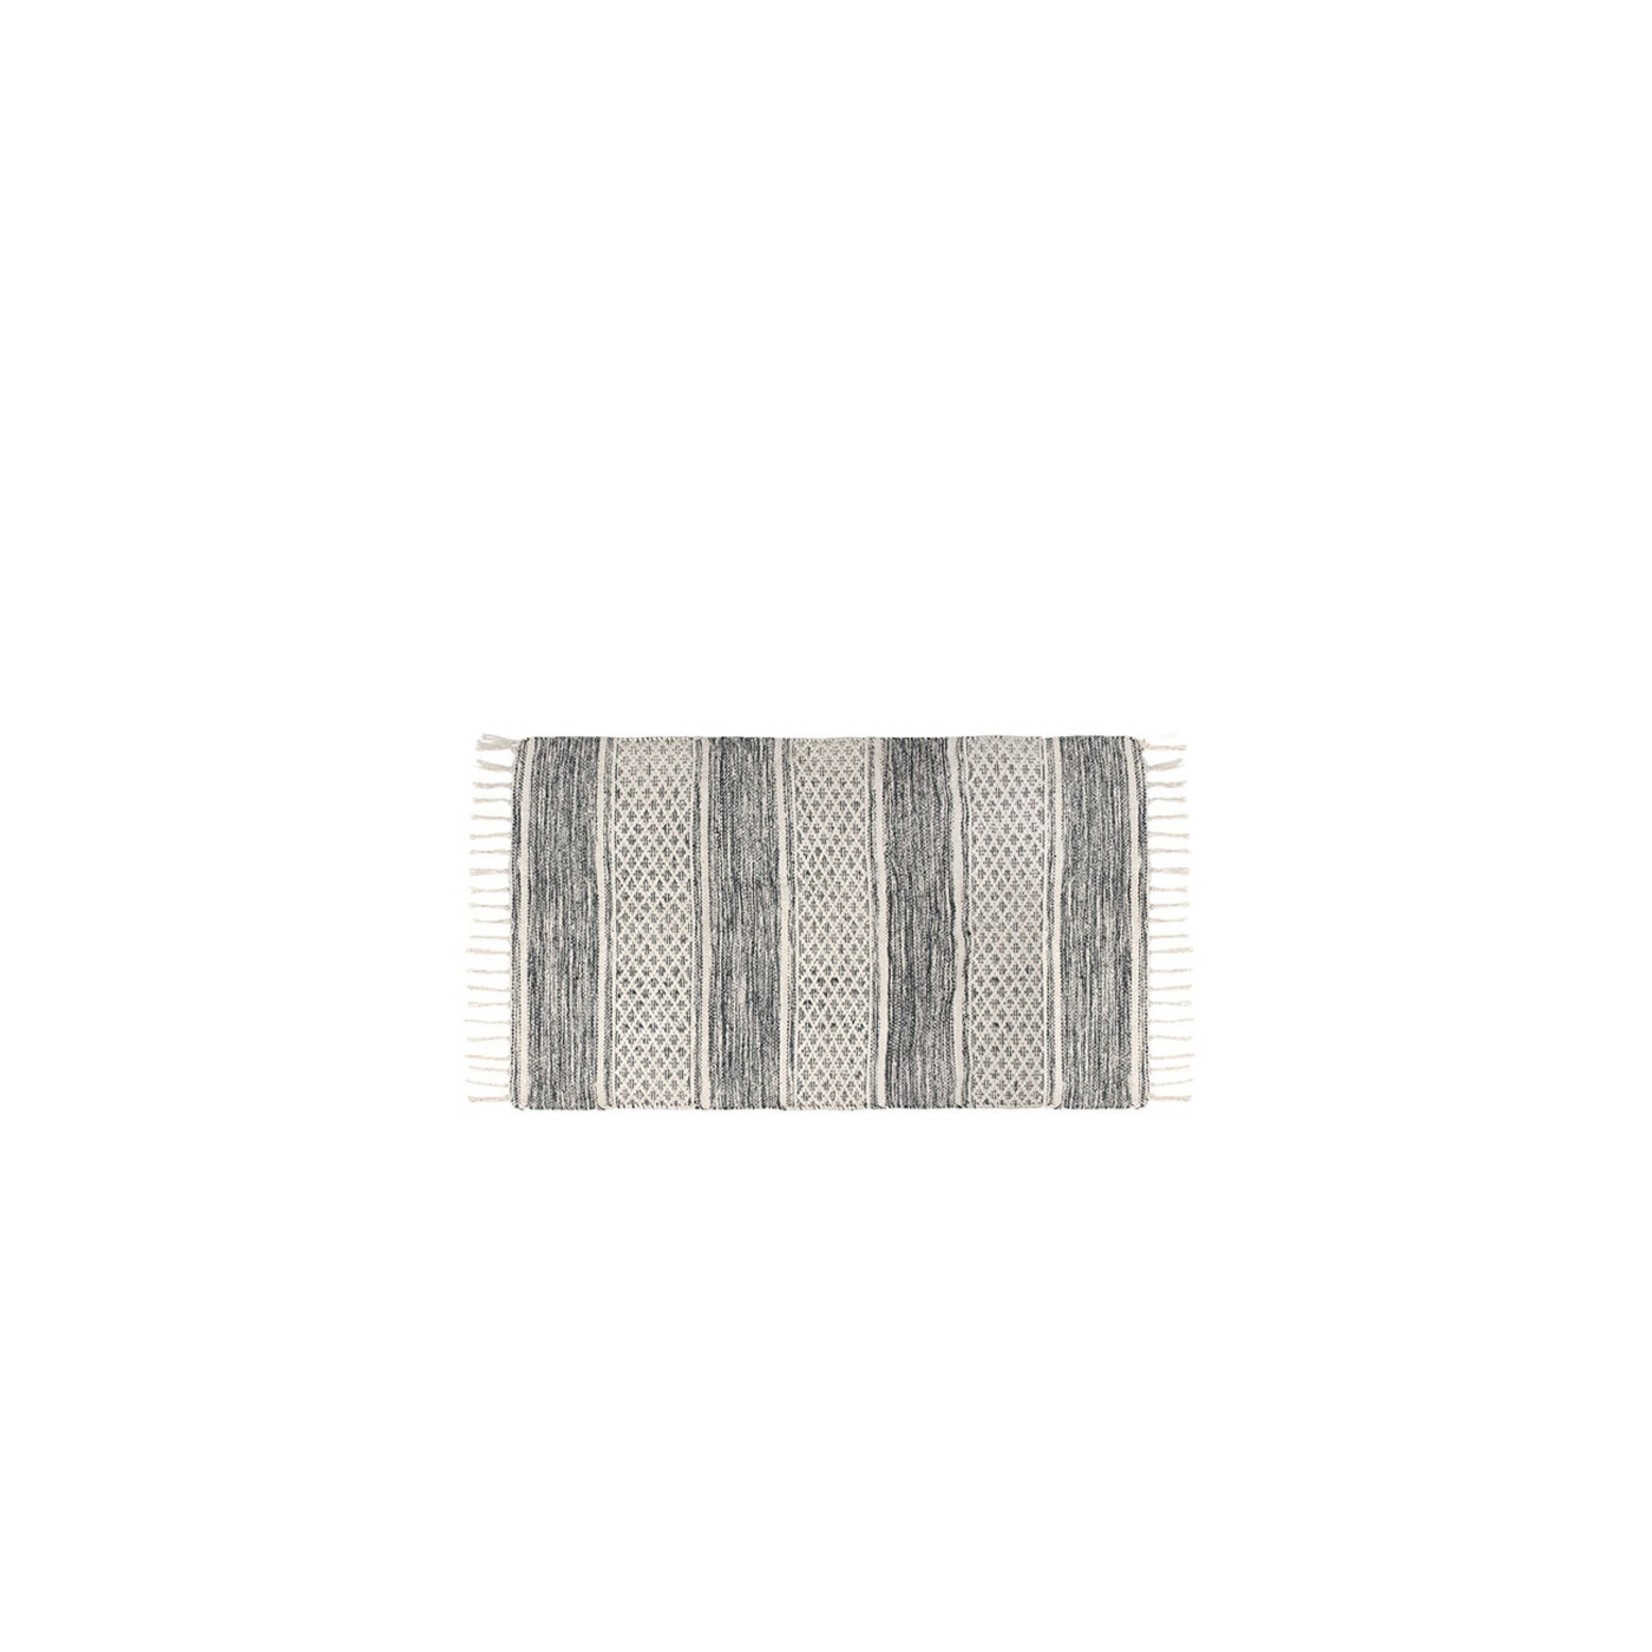 Lima Tasseled Floor Mat, Grey -